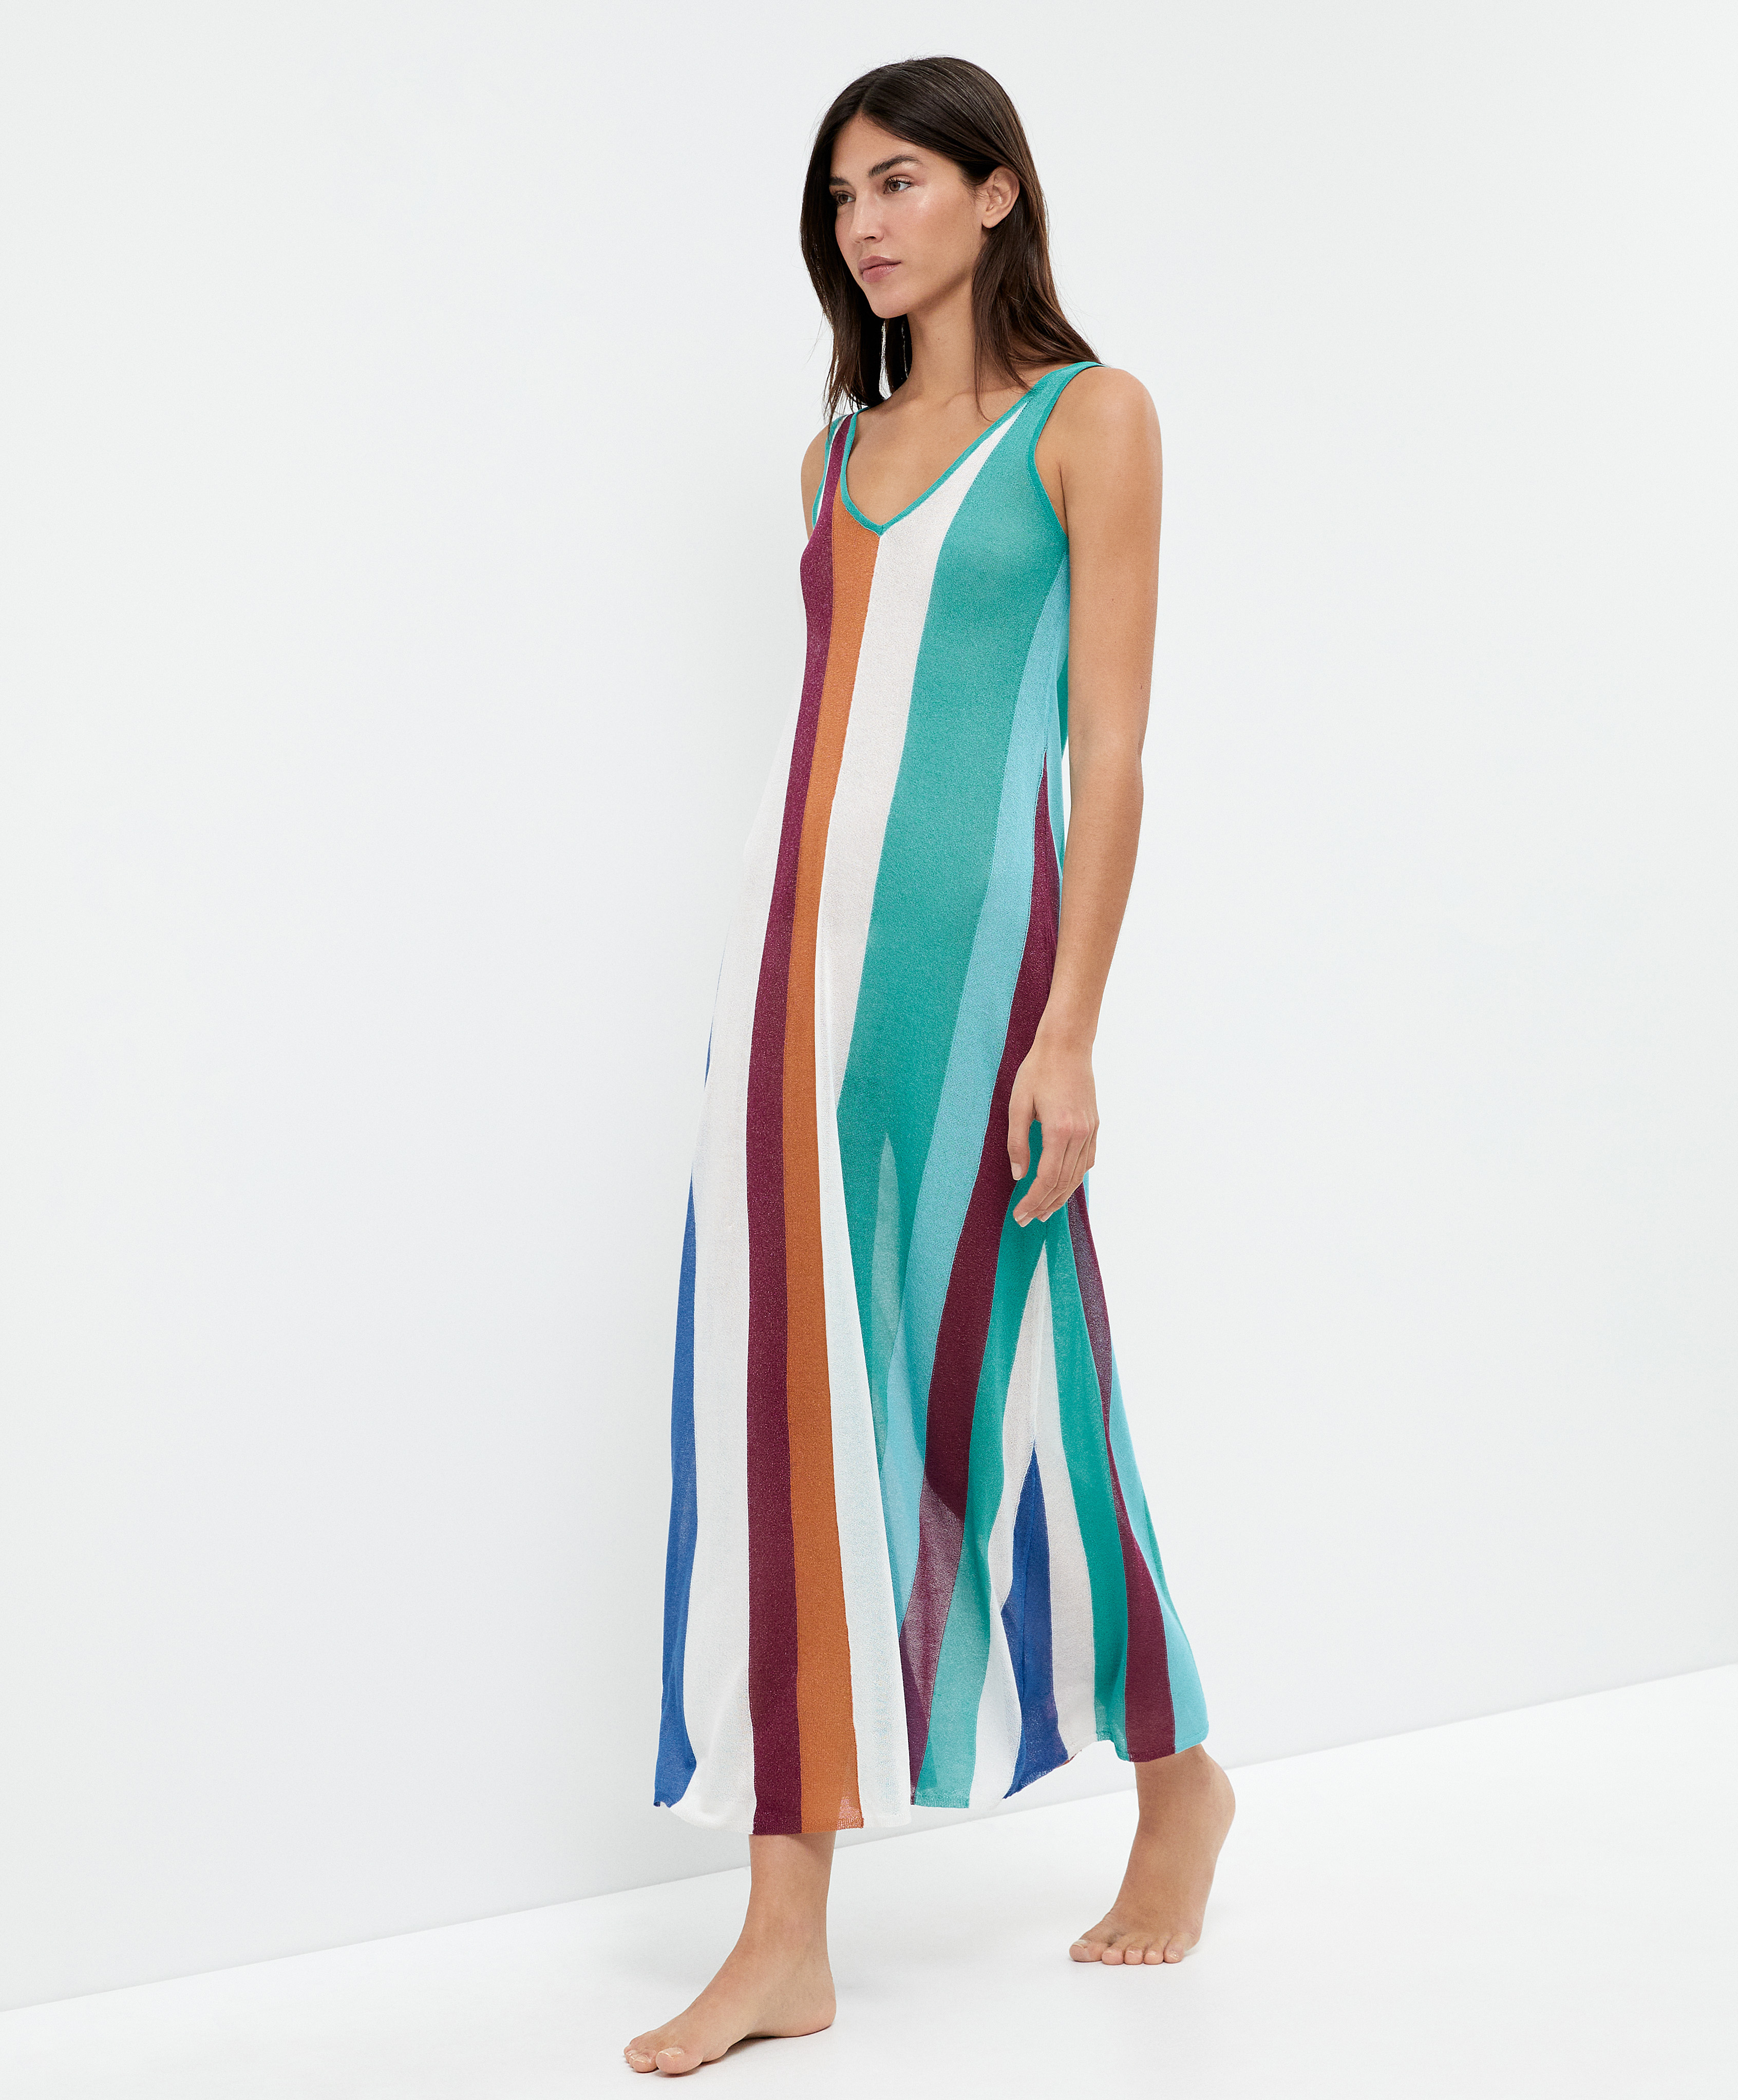 Vertical stripe knit dress